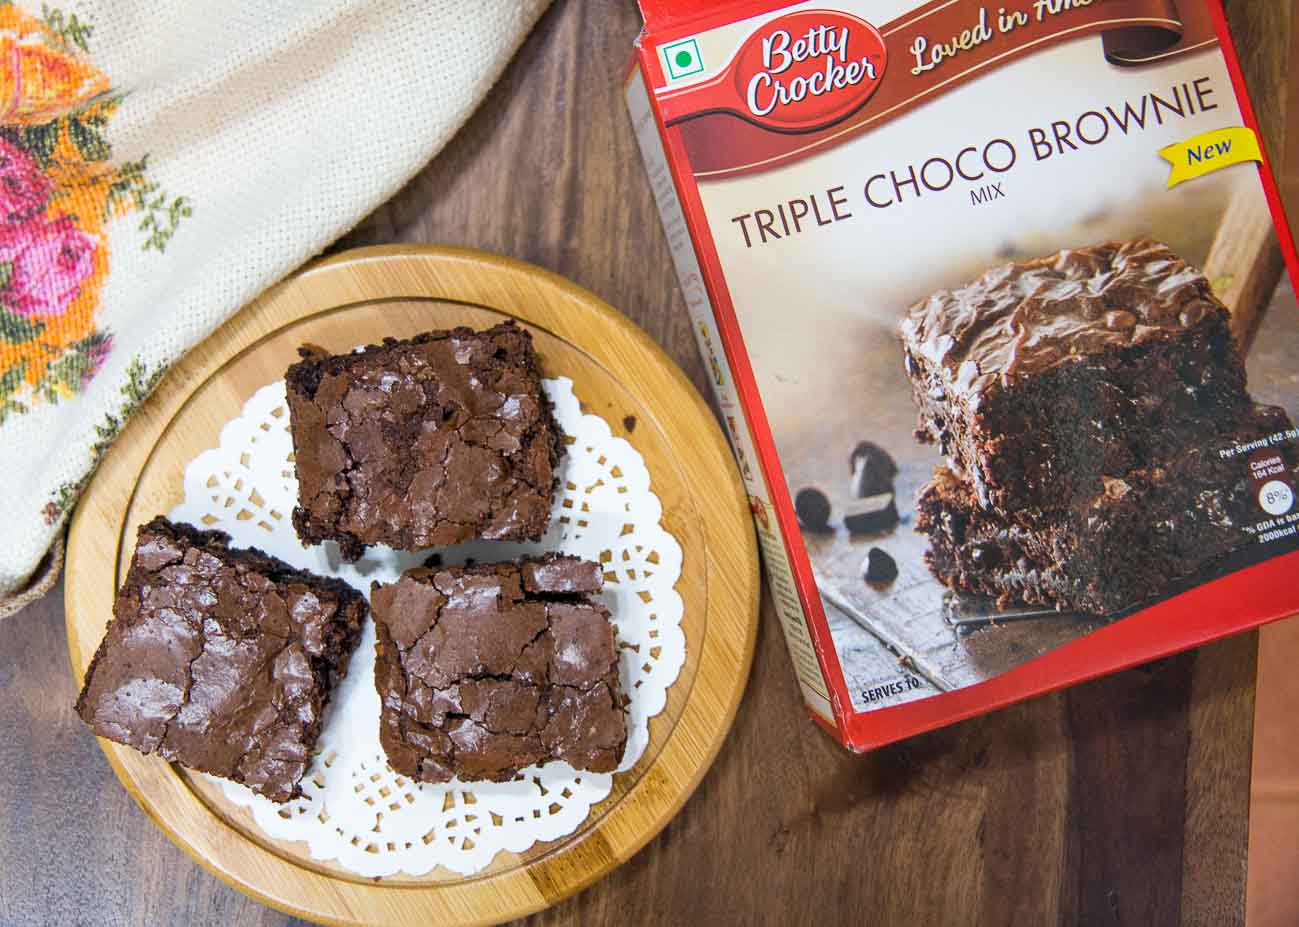 Betty Crocker Triple Chocolate Brownie Mix